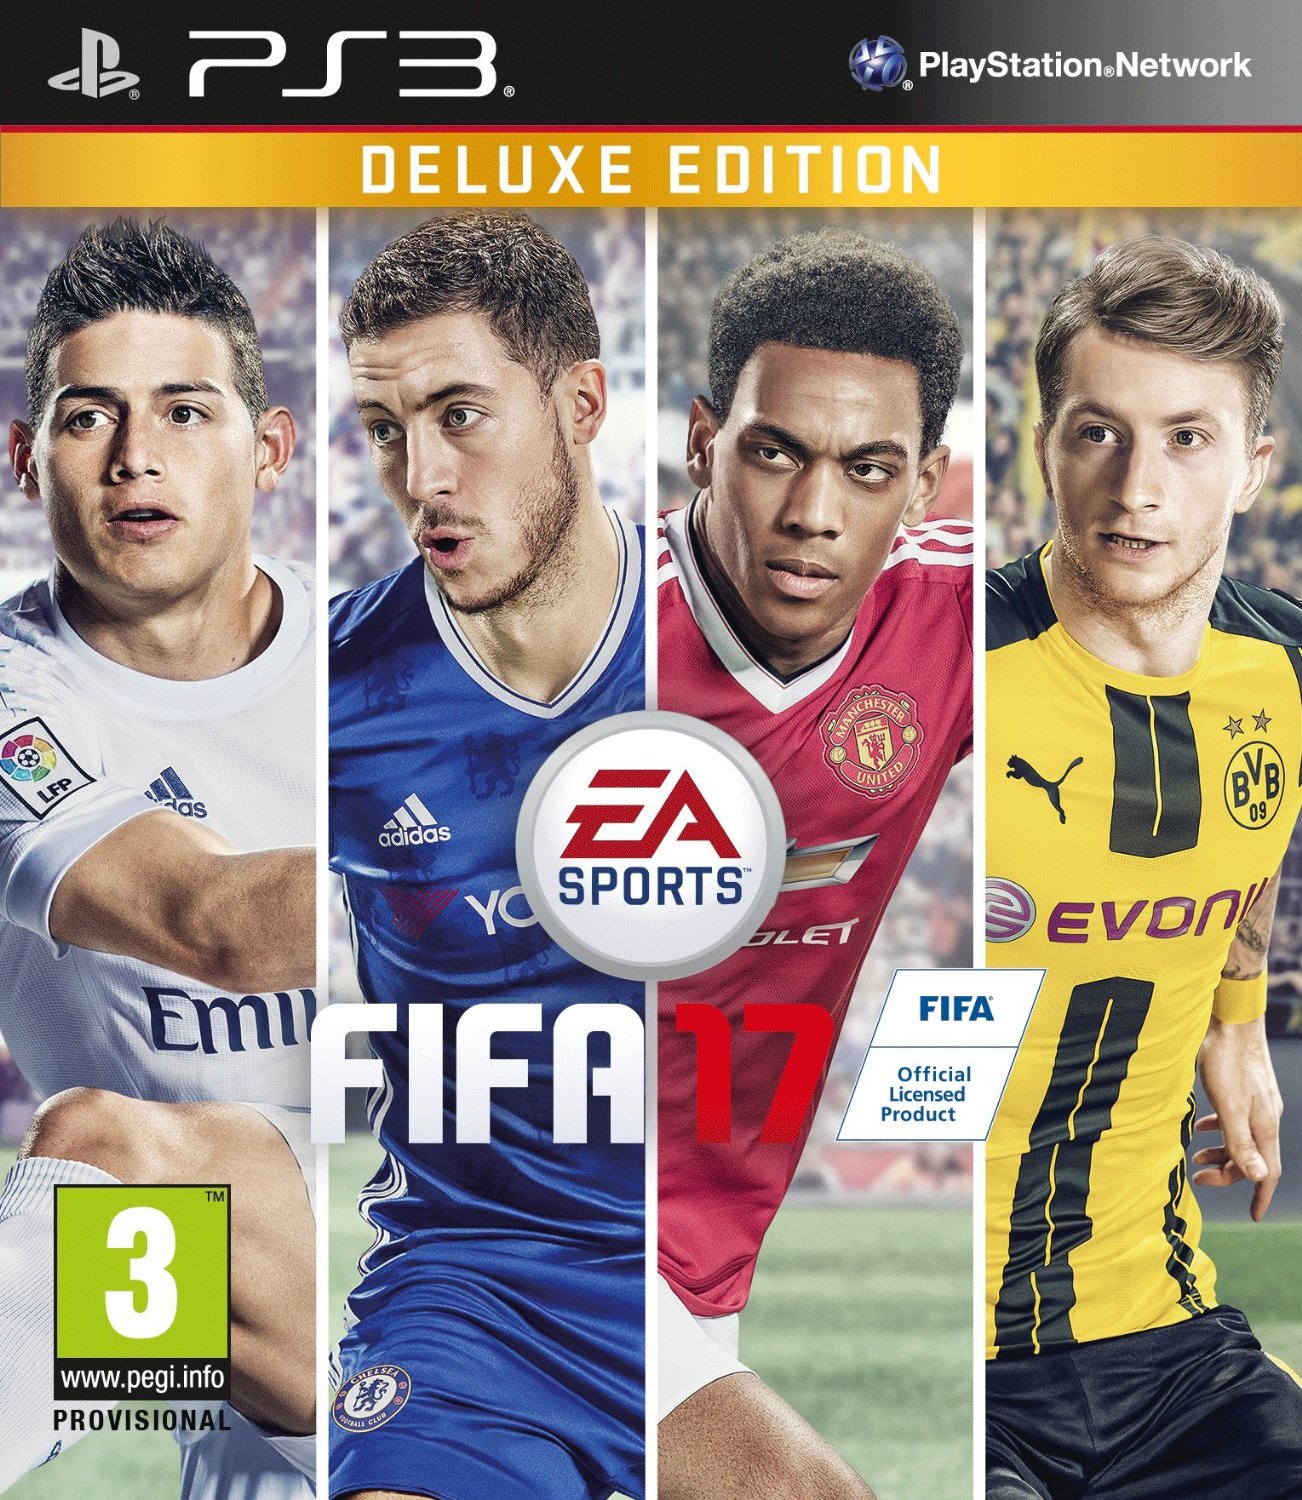 FIFA 17 Deluxe Edition (PS3), EA Sports